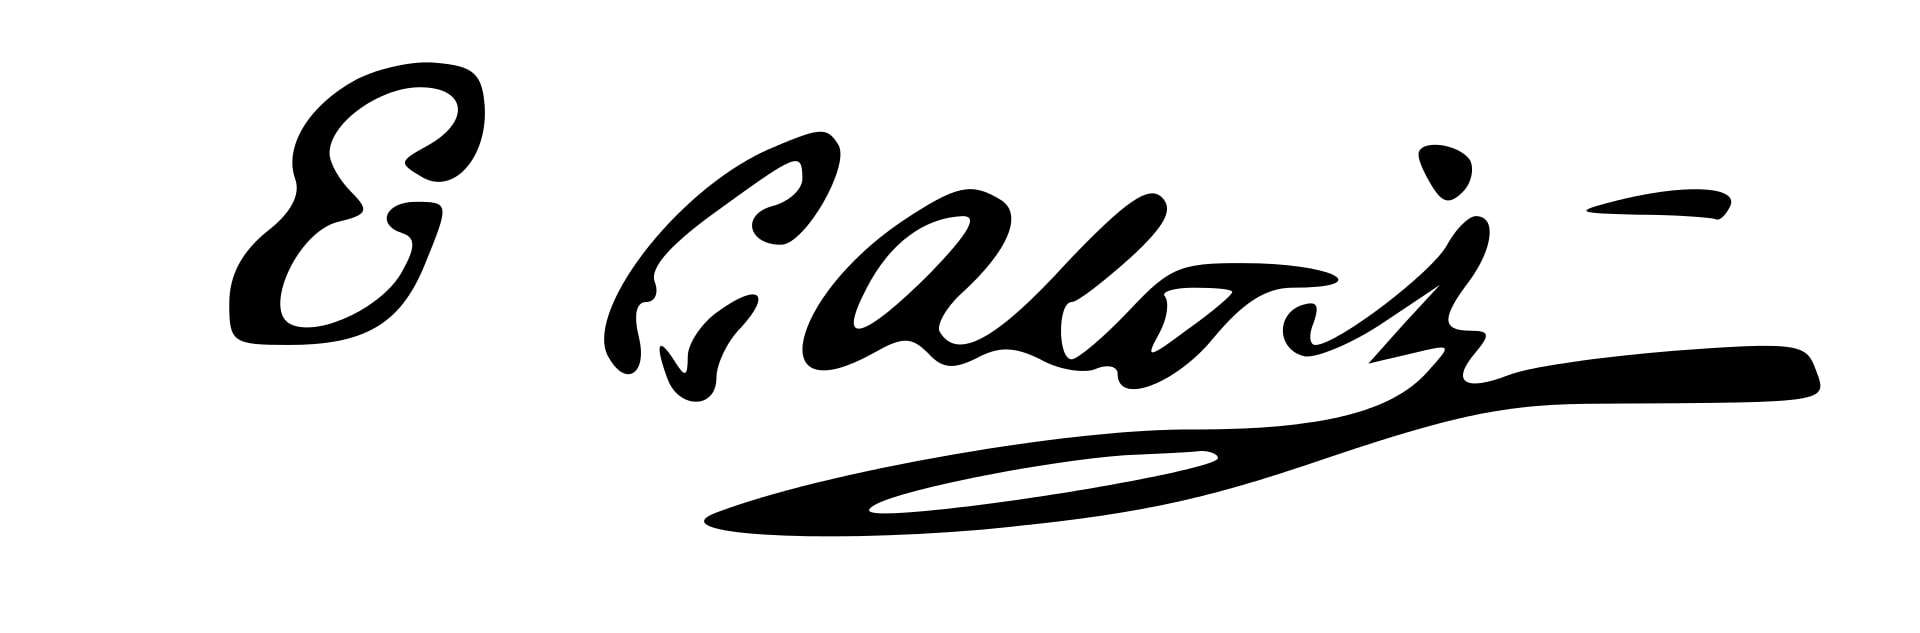 Évariste Galois Signature